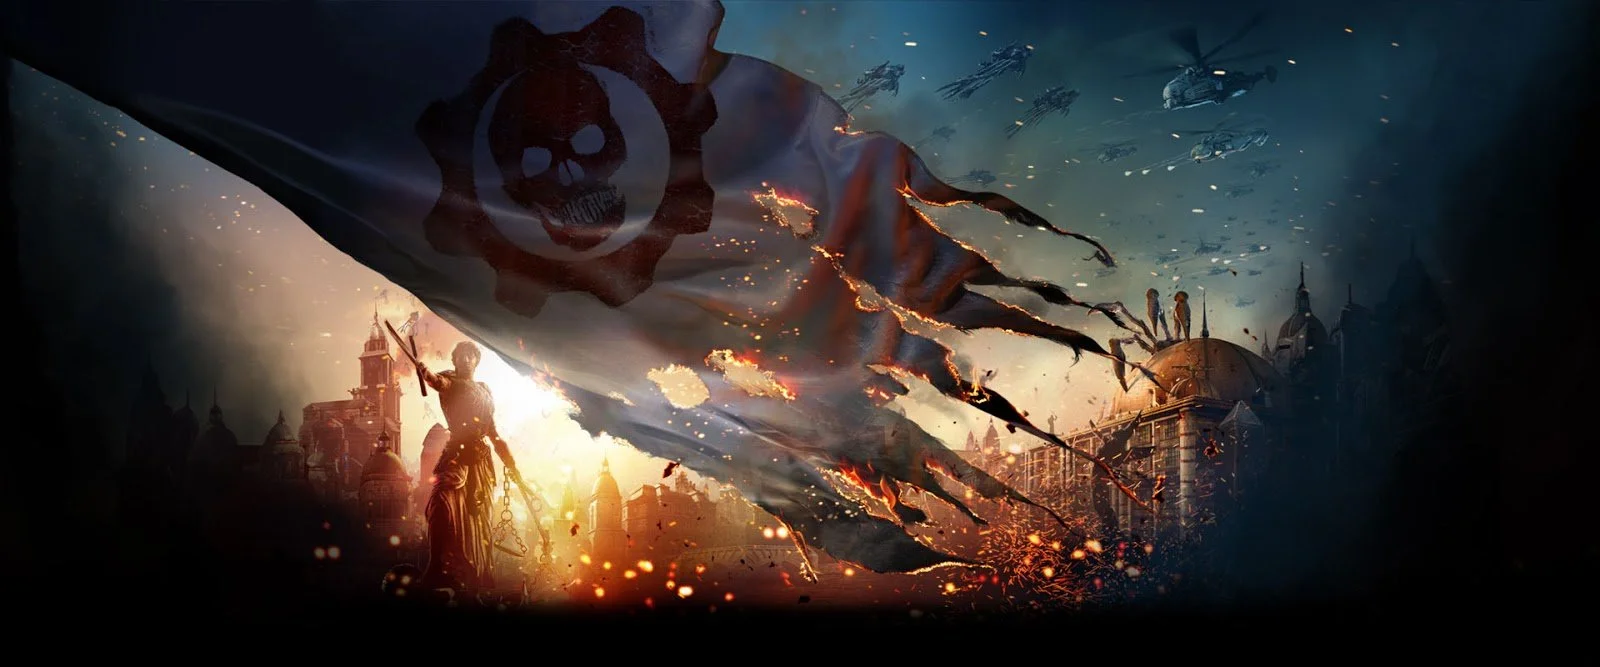 Хронология вселенной Gears of War. Интерактивный таймлайн - фото 1